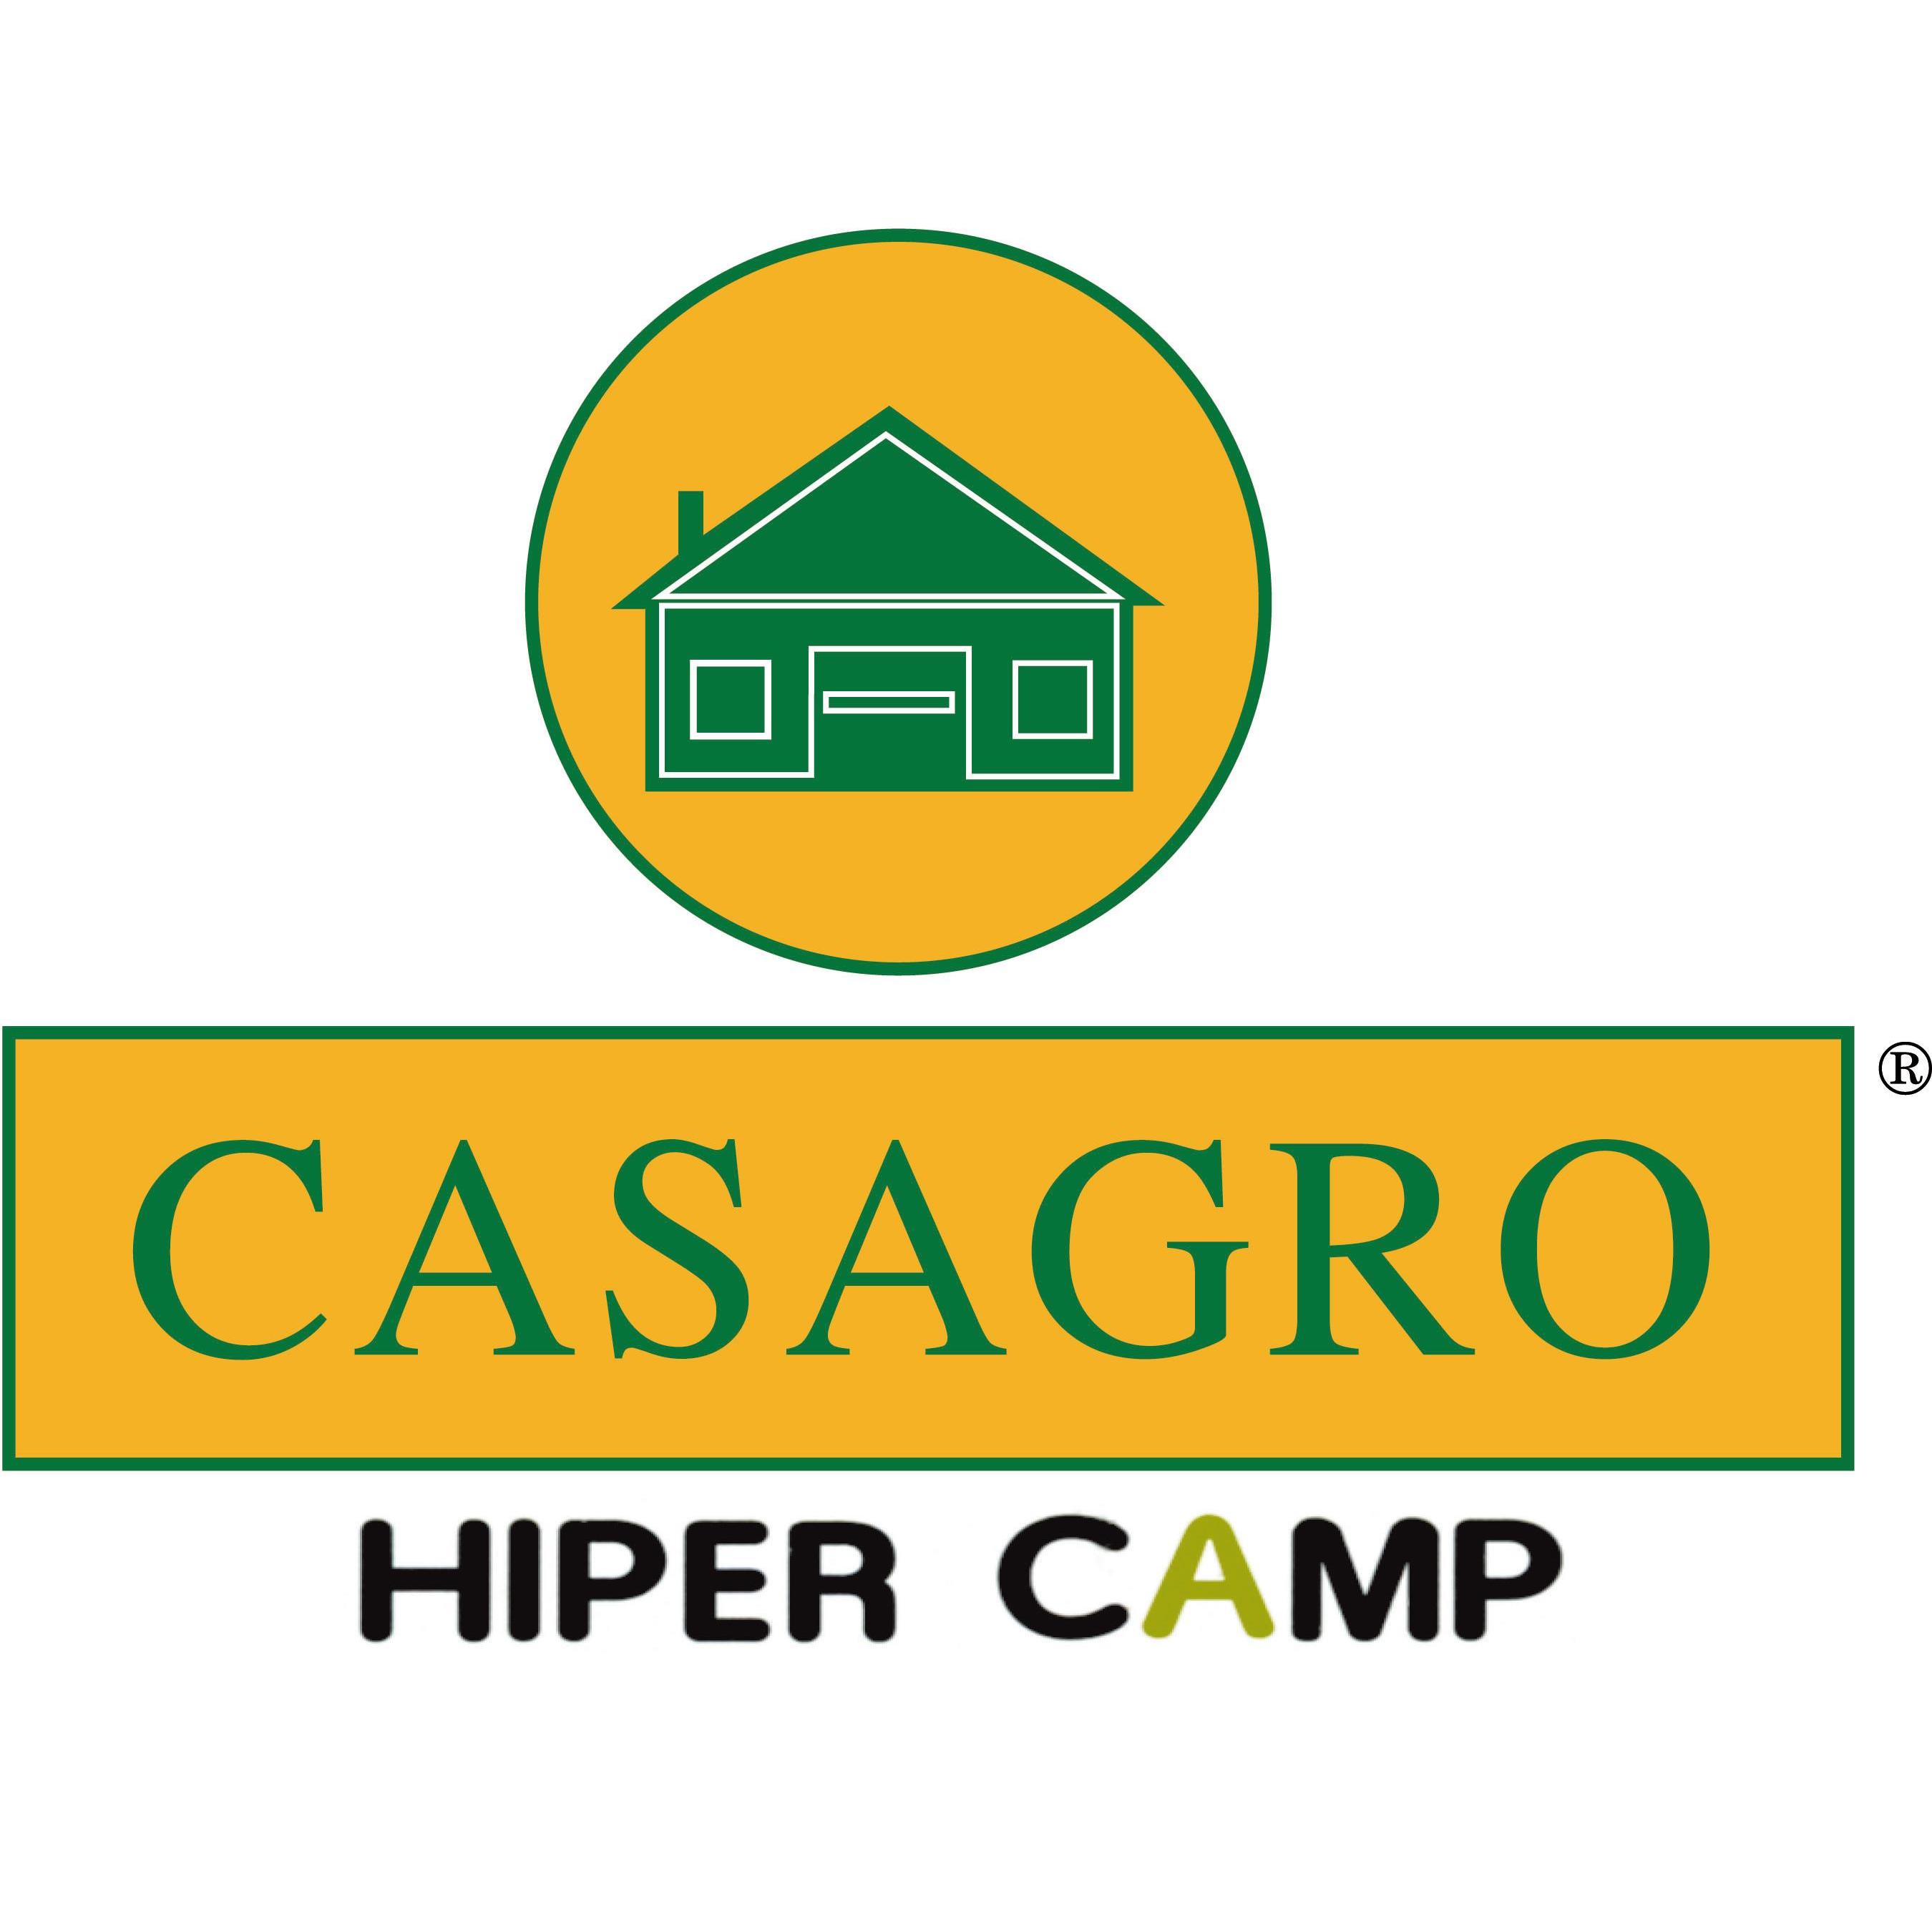 Casagro Hiper Camp Logo